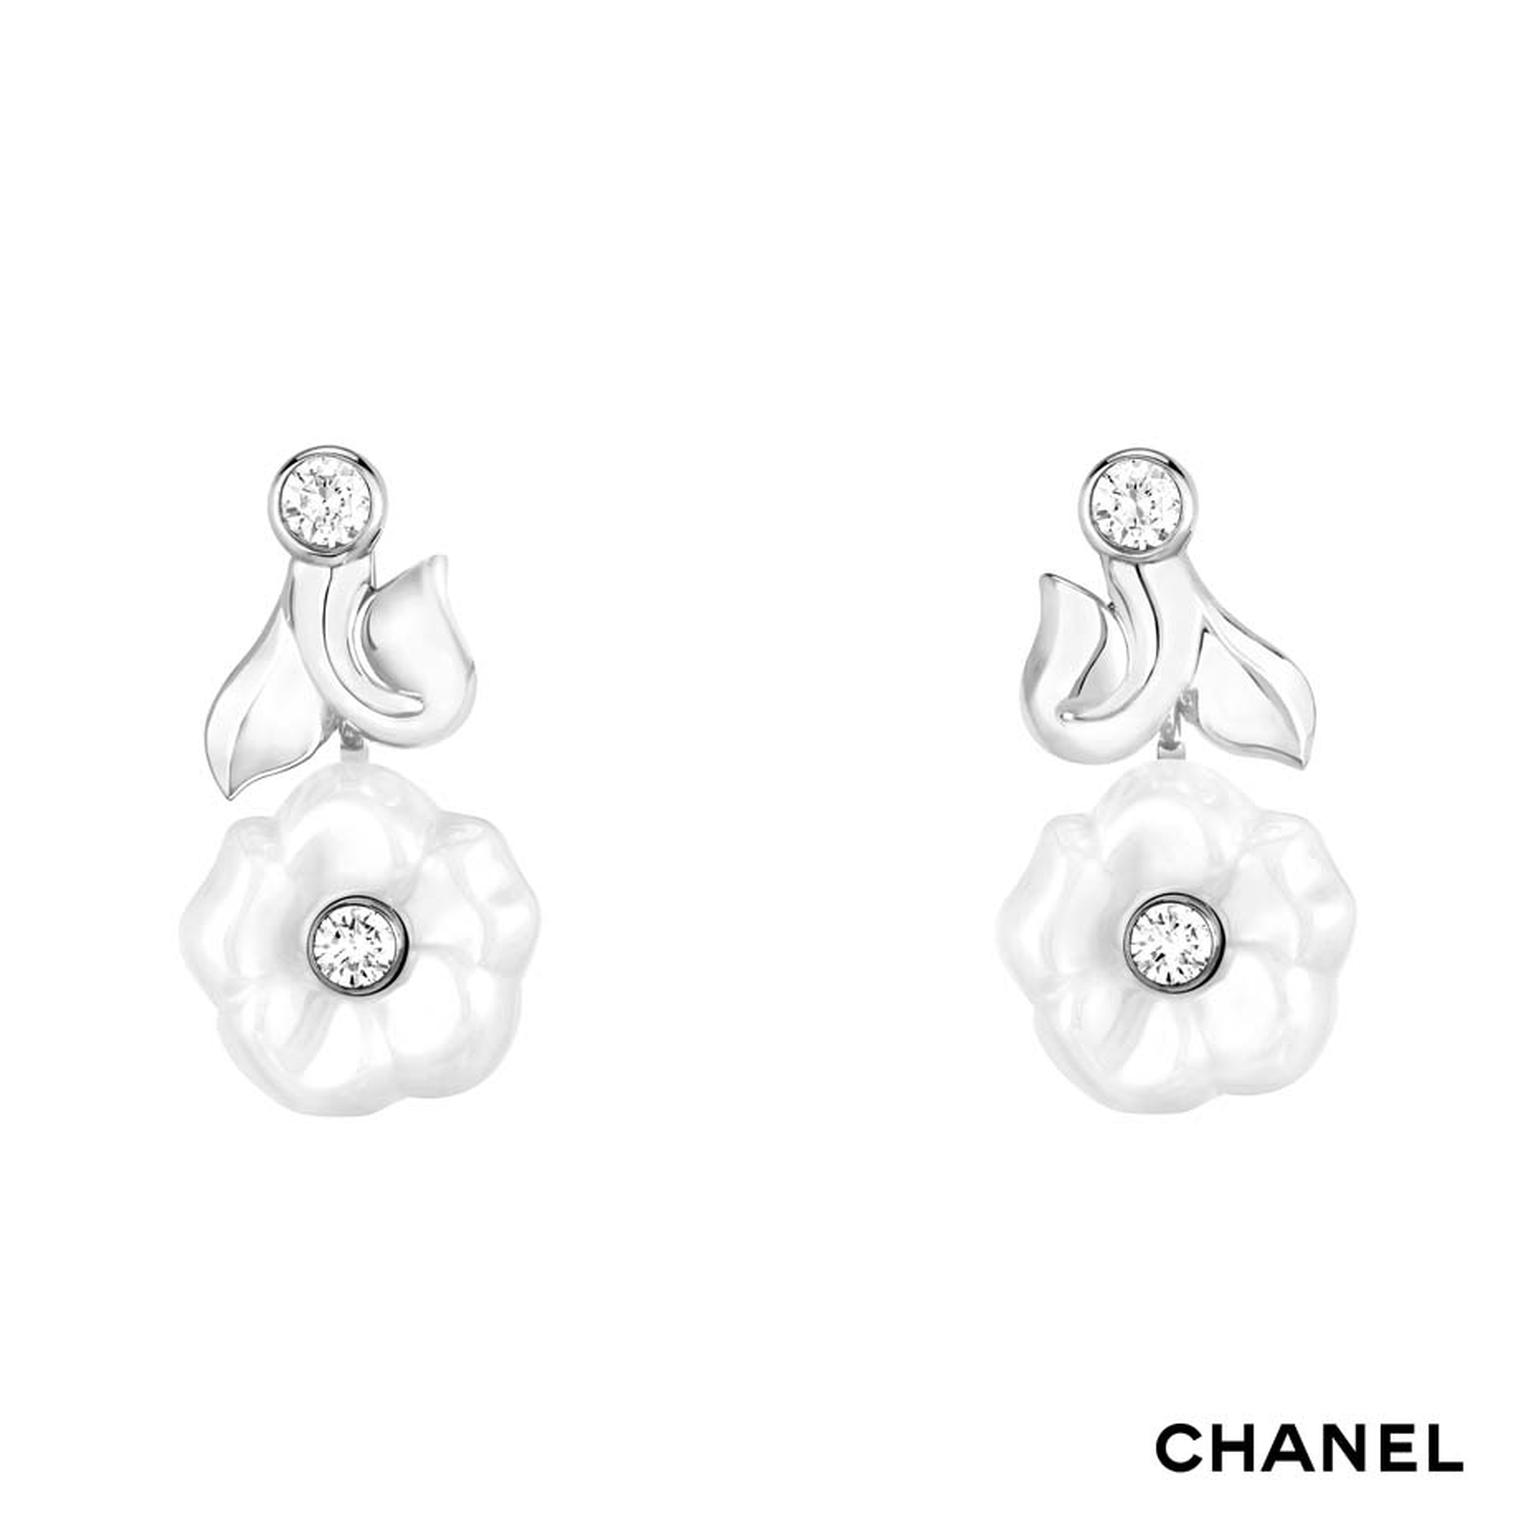 Chanel Camélia Galbé white gold and white ceramic earrings set with four brilliant-cut diamonds